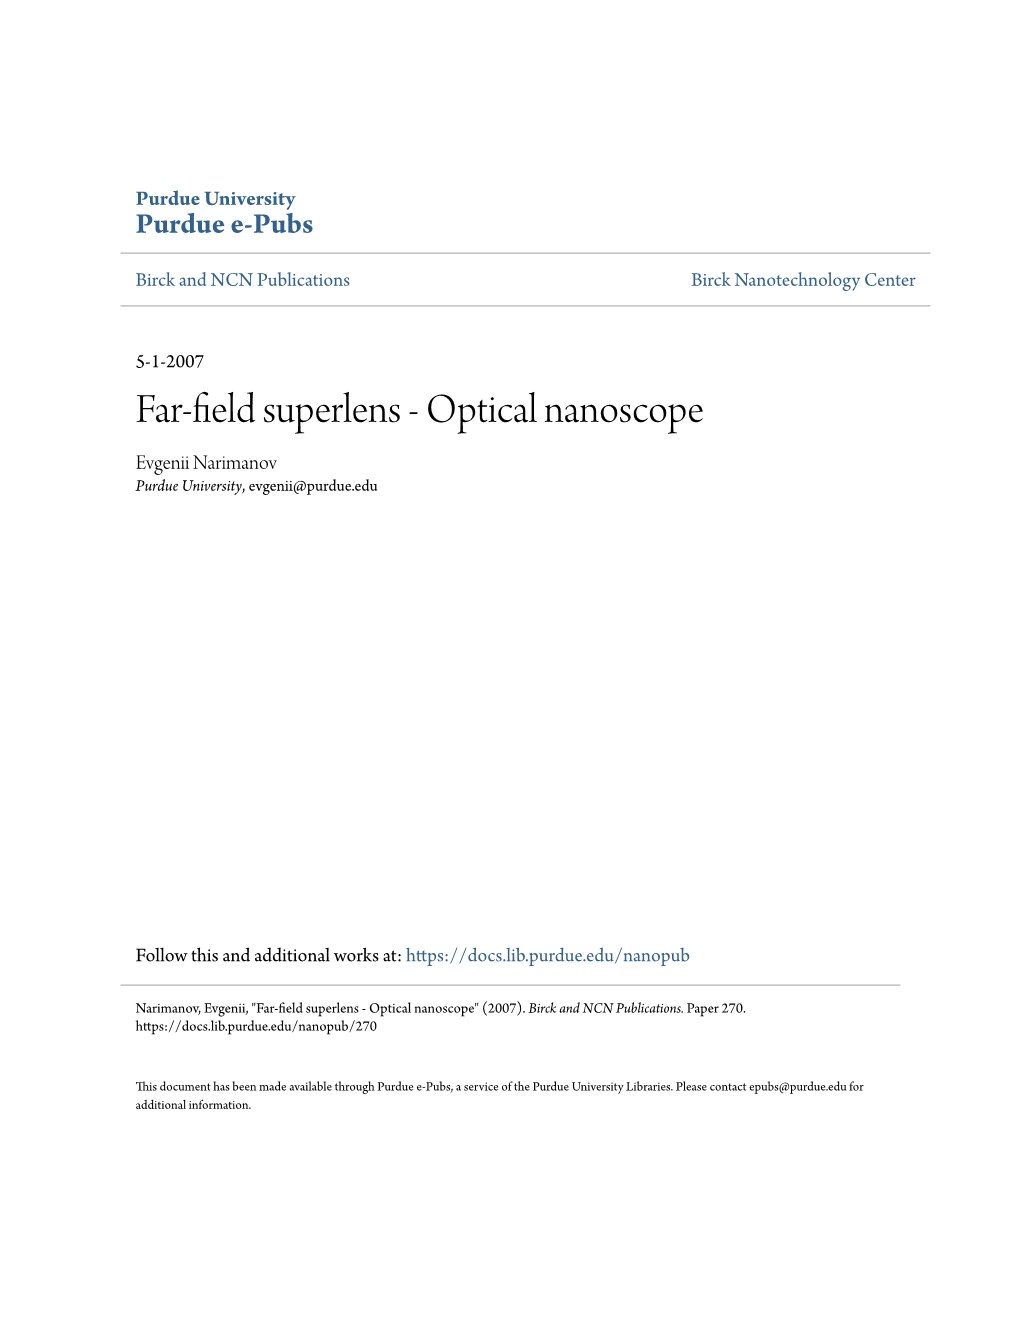 Far-Field Superlens - Optical Nanoscope" (2007)